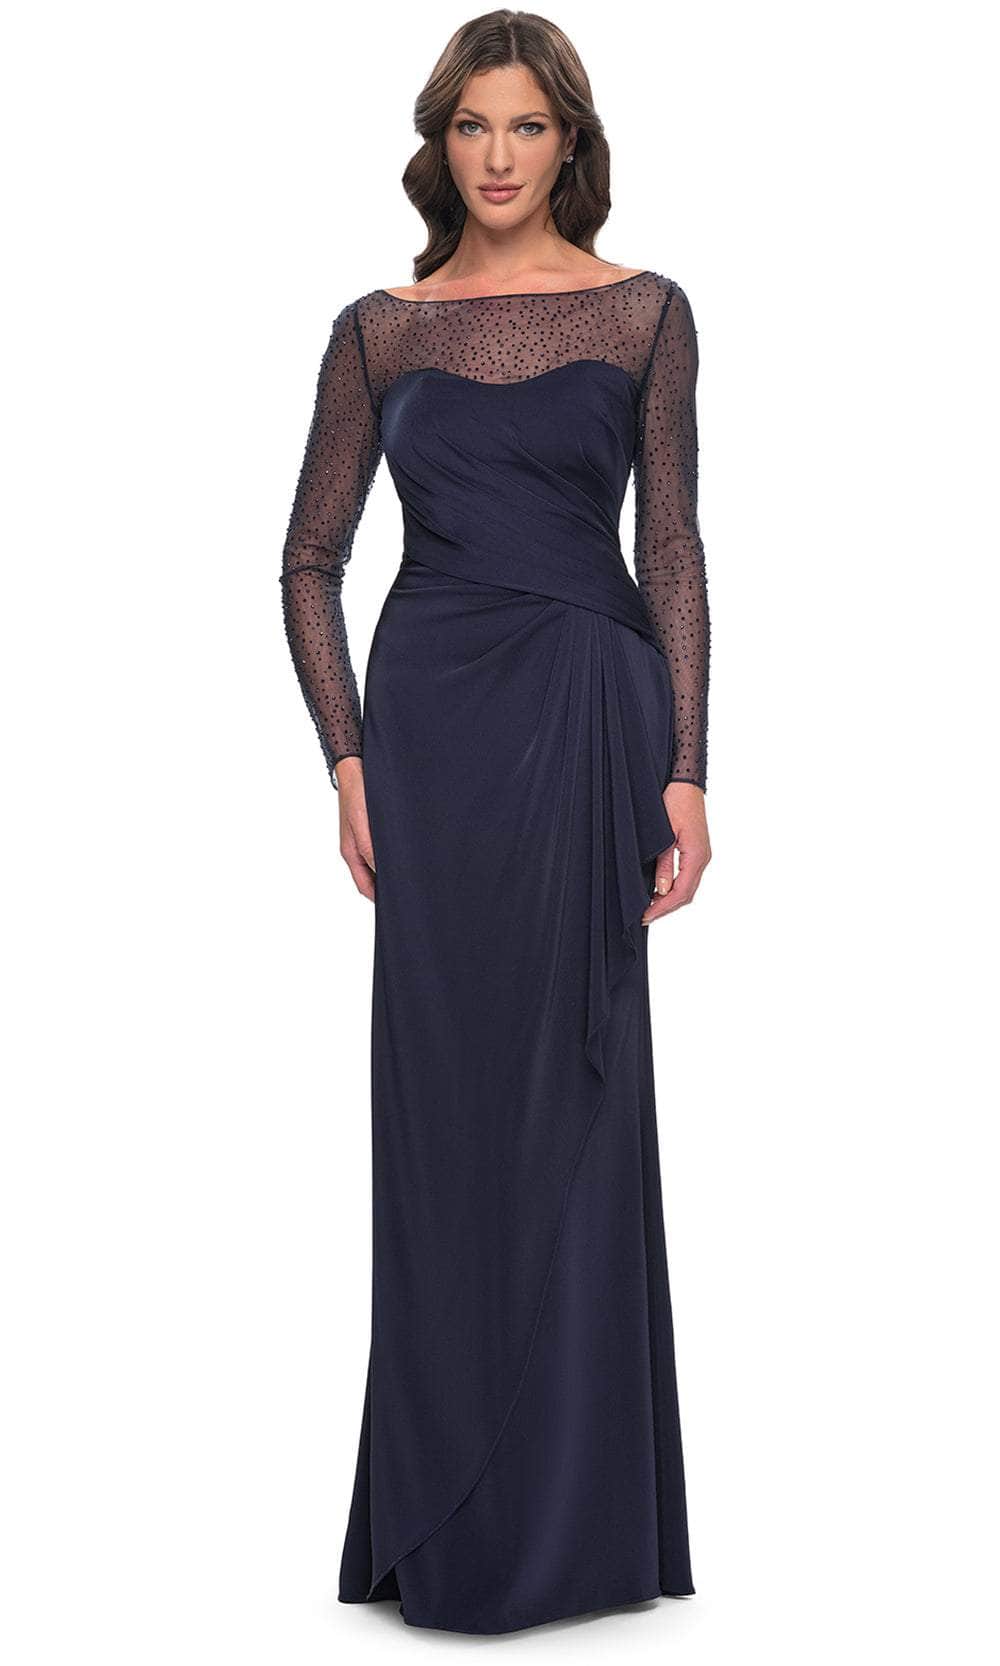 La Femme 30808 - Rhinestone Illusion Formal Dress Mother of the Bride Dresses 2 / Navy